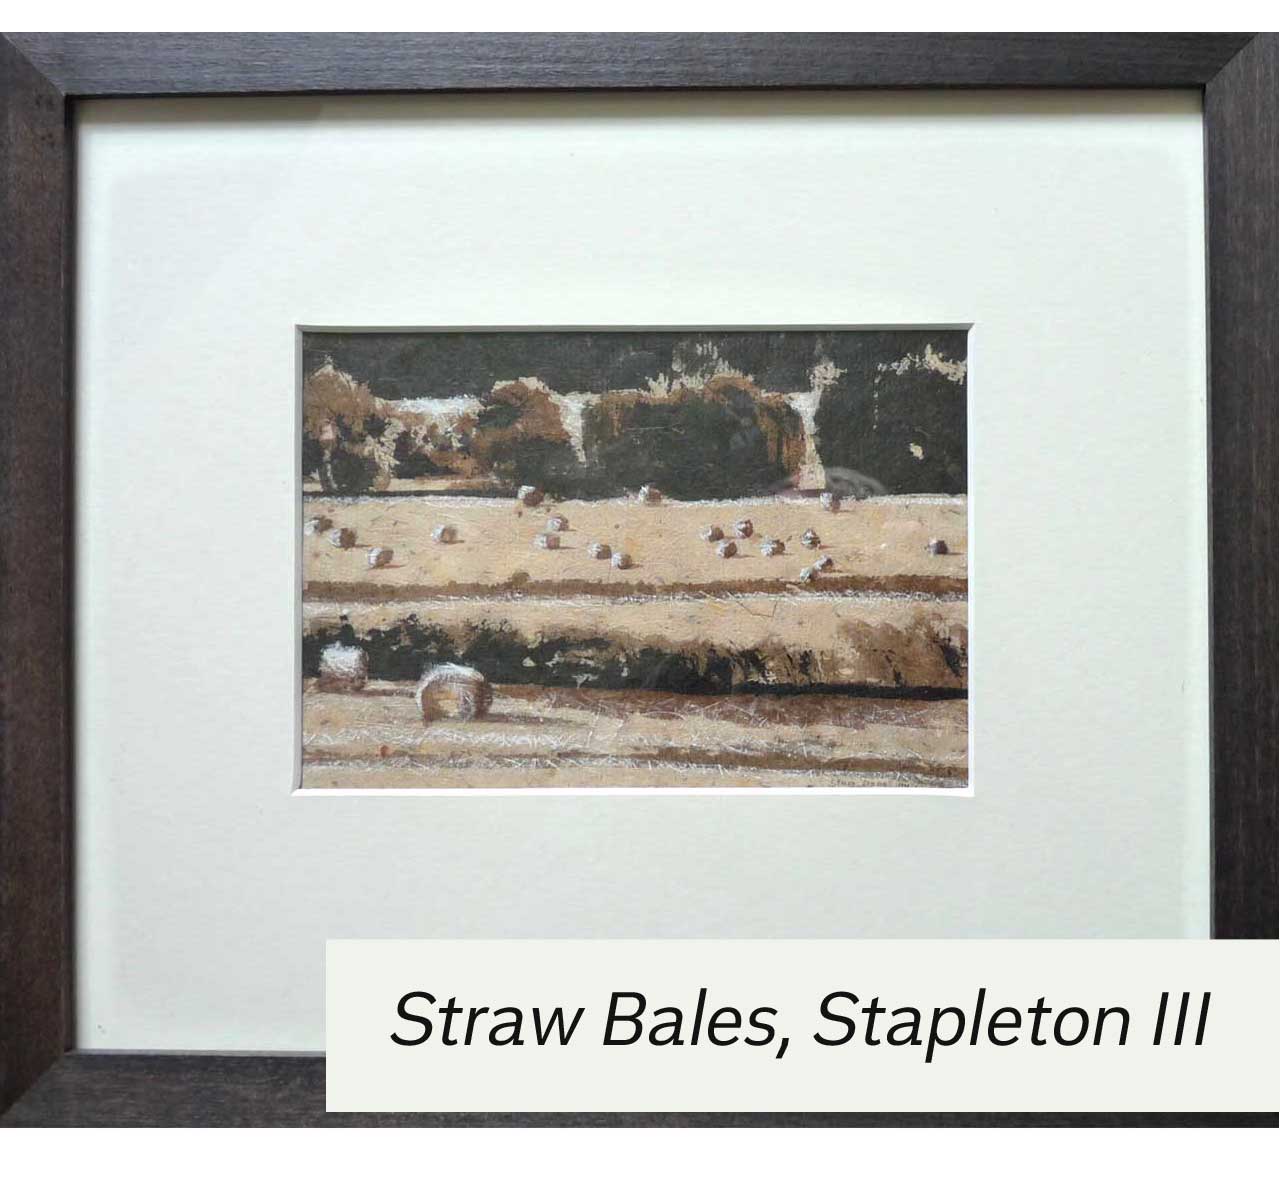 Straw Bales, Moor Farm, Stapleton III by Simon Dorrell